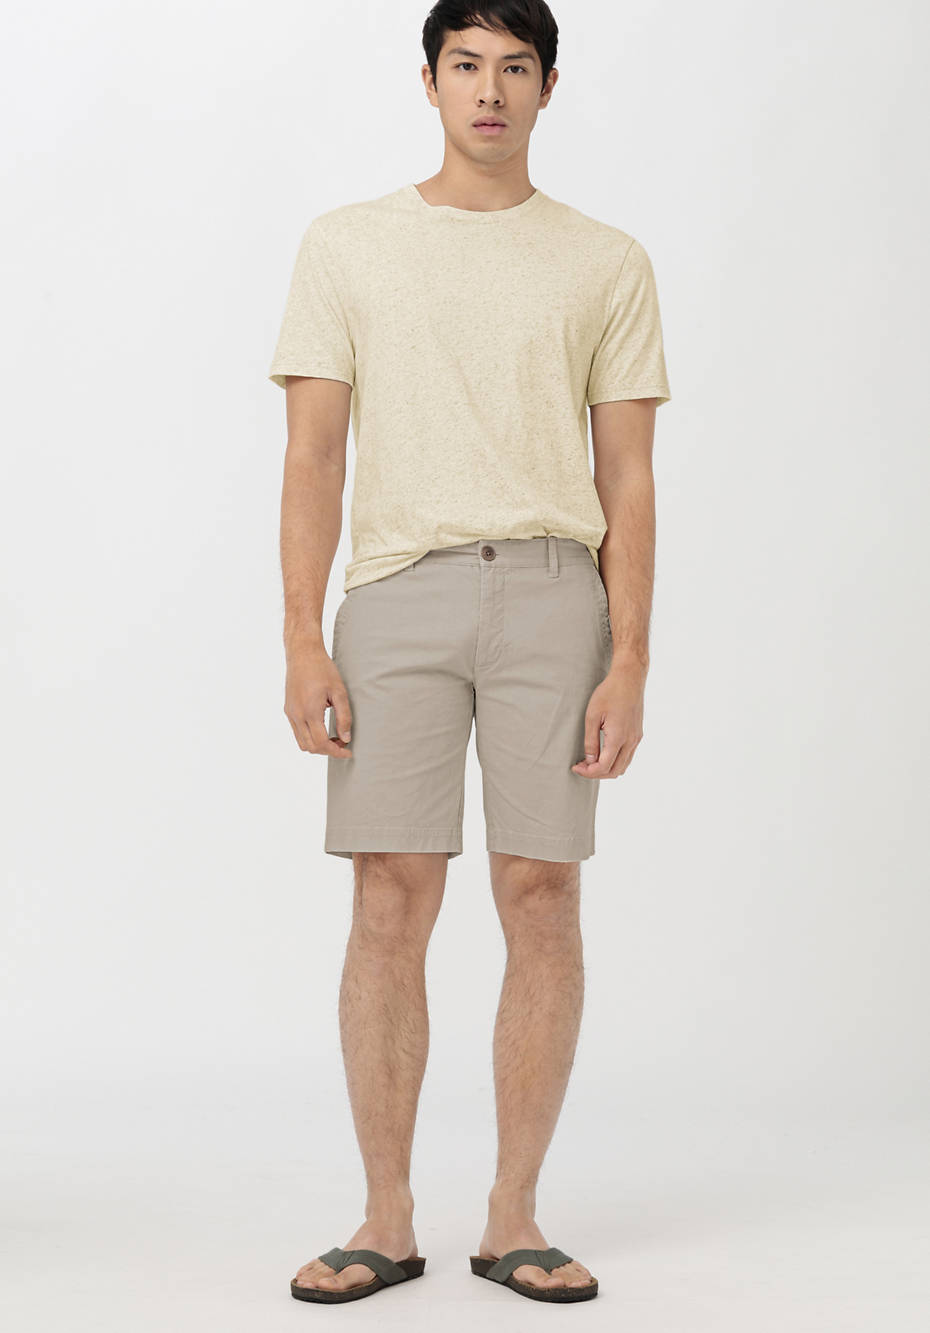 Chino shorts made from organic cotton with hemp